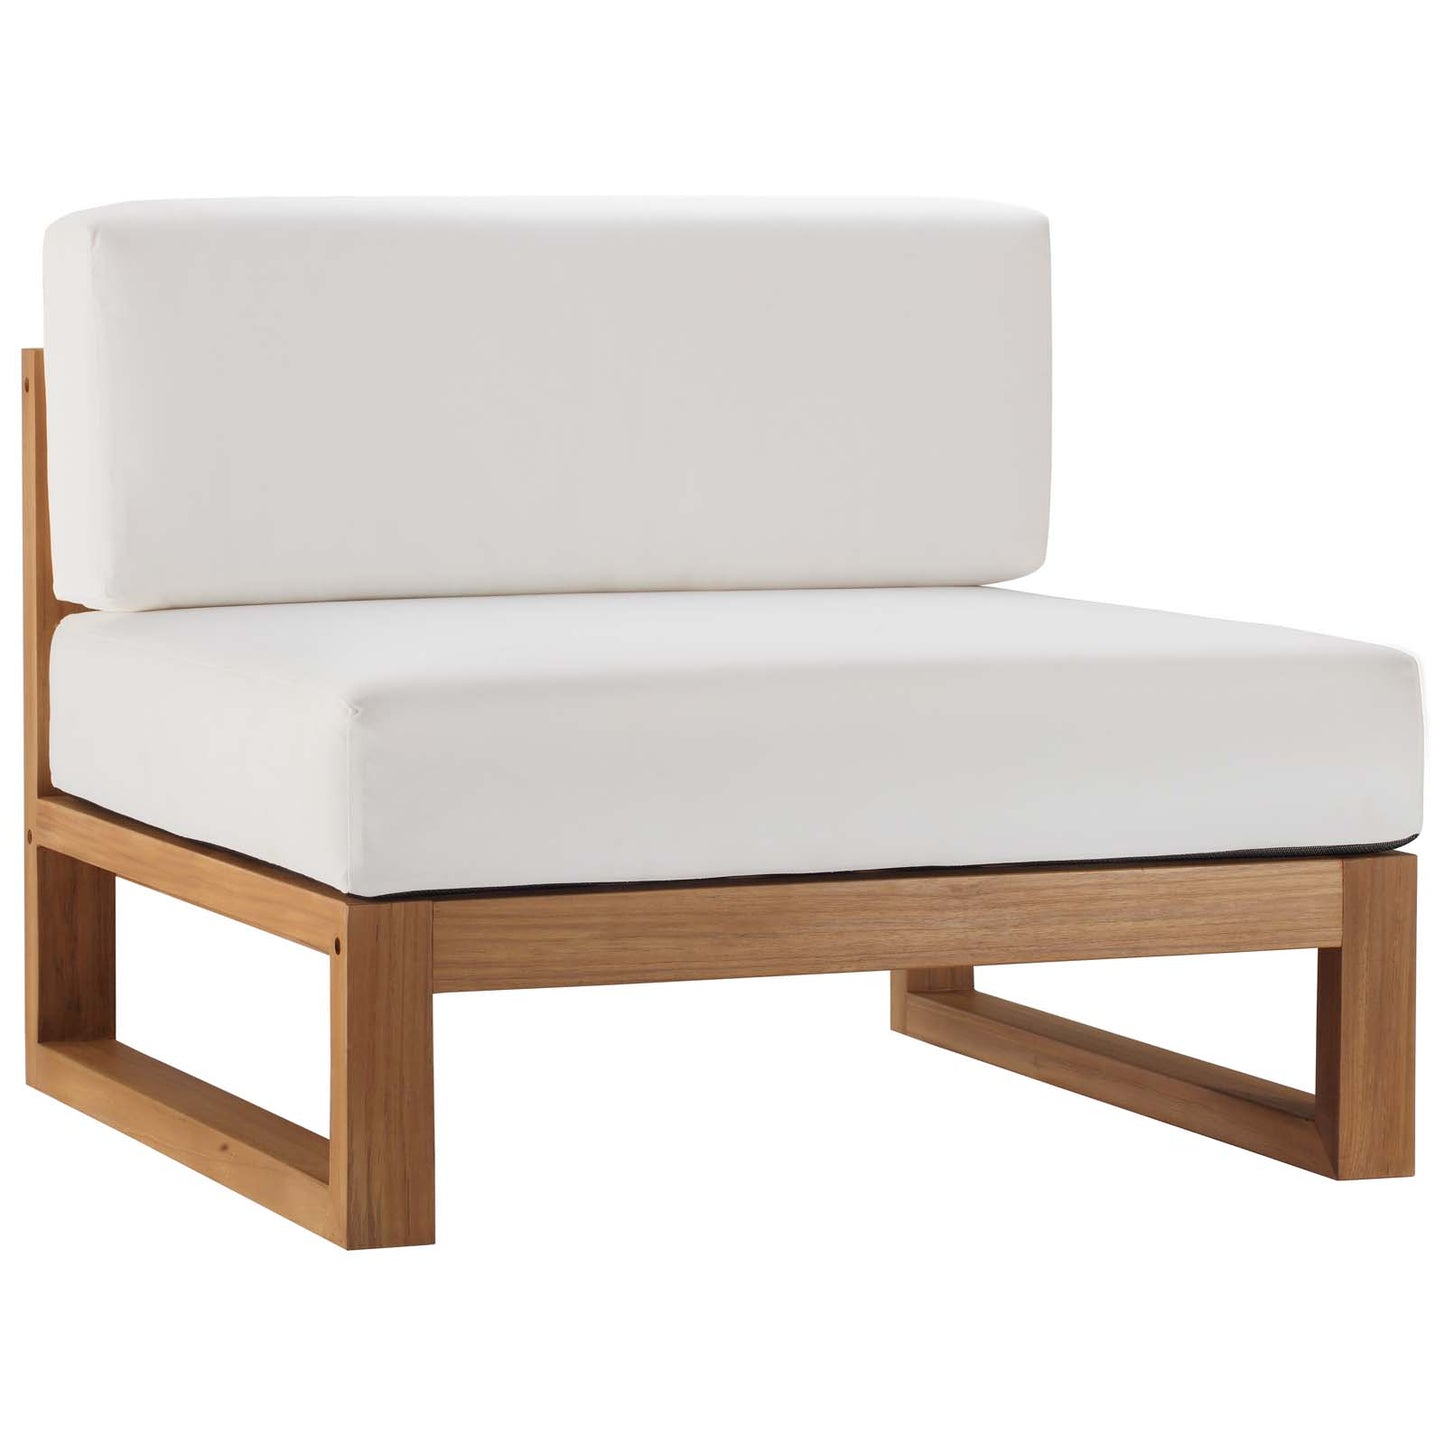 Upland Outdoor Patio Teak Wood 4-Piece Sectional Sofa Set Natural White EEI-4253-NAT-WHI-SET